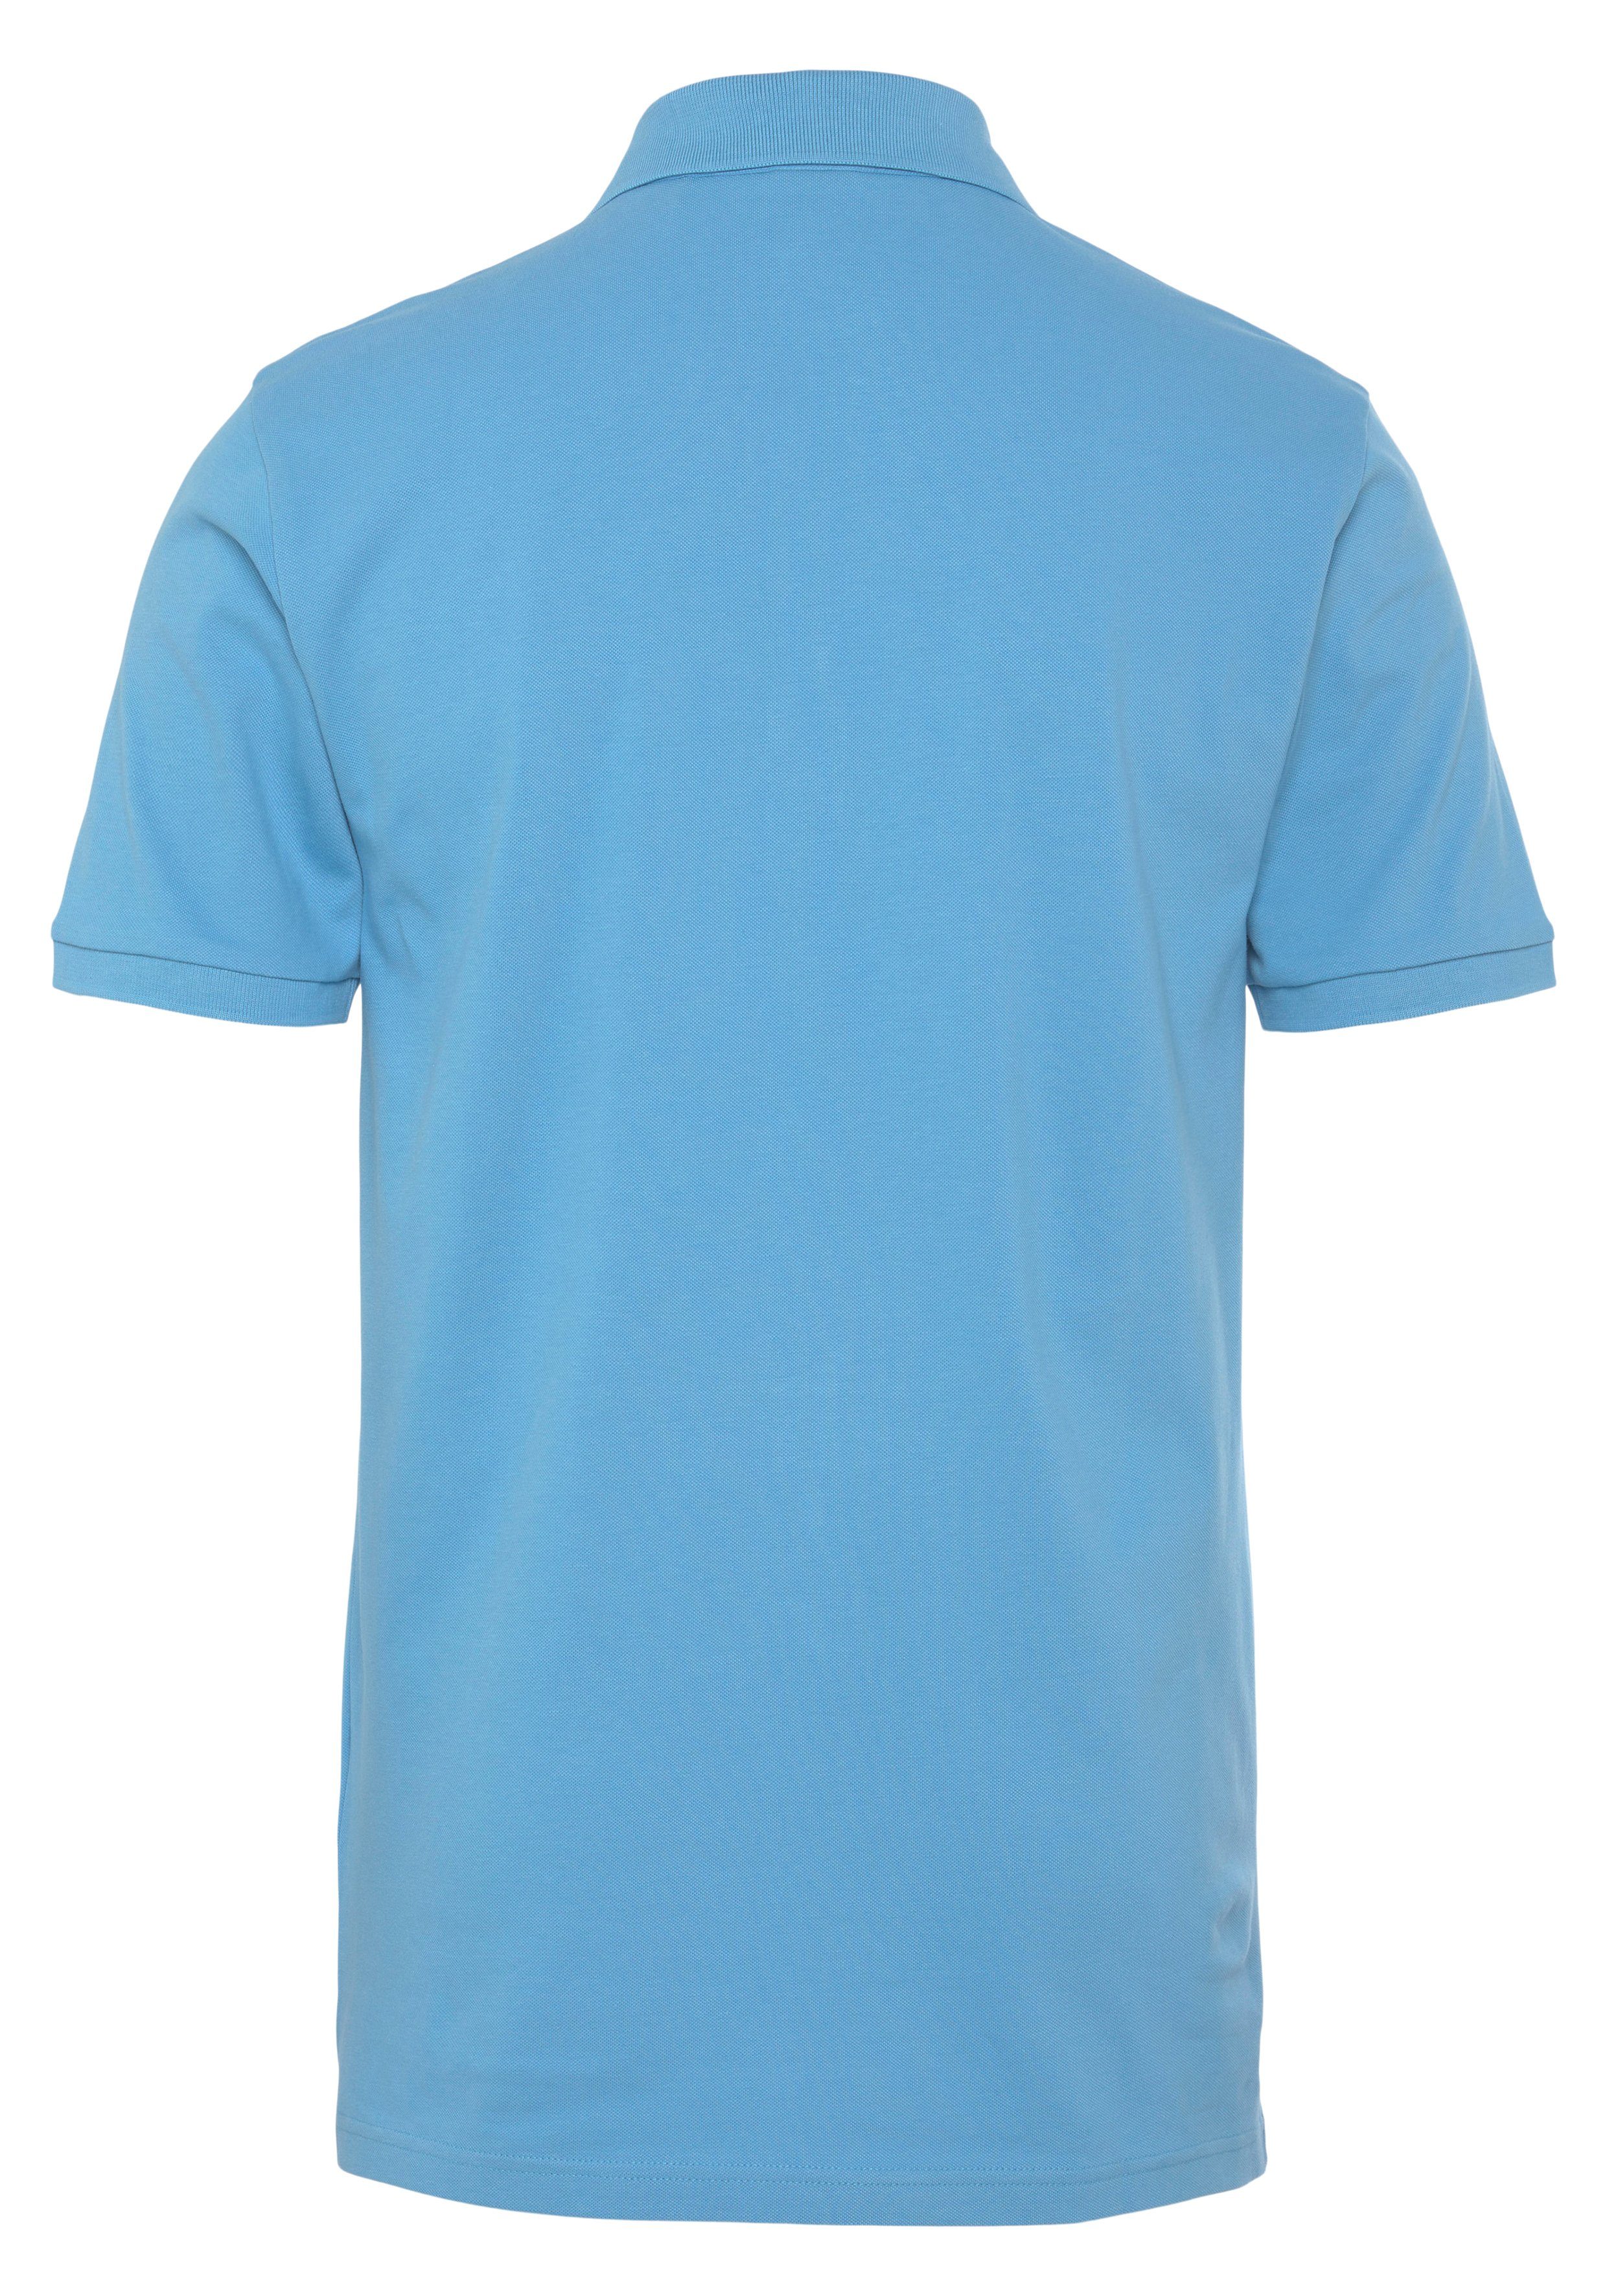 ORANGE Logo-Patch dezentem Blue BOSS BOSS Passenger Open Poloshirt von mit